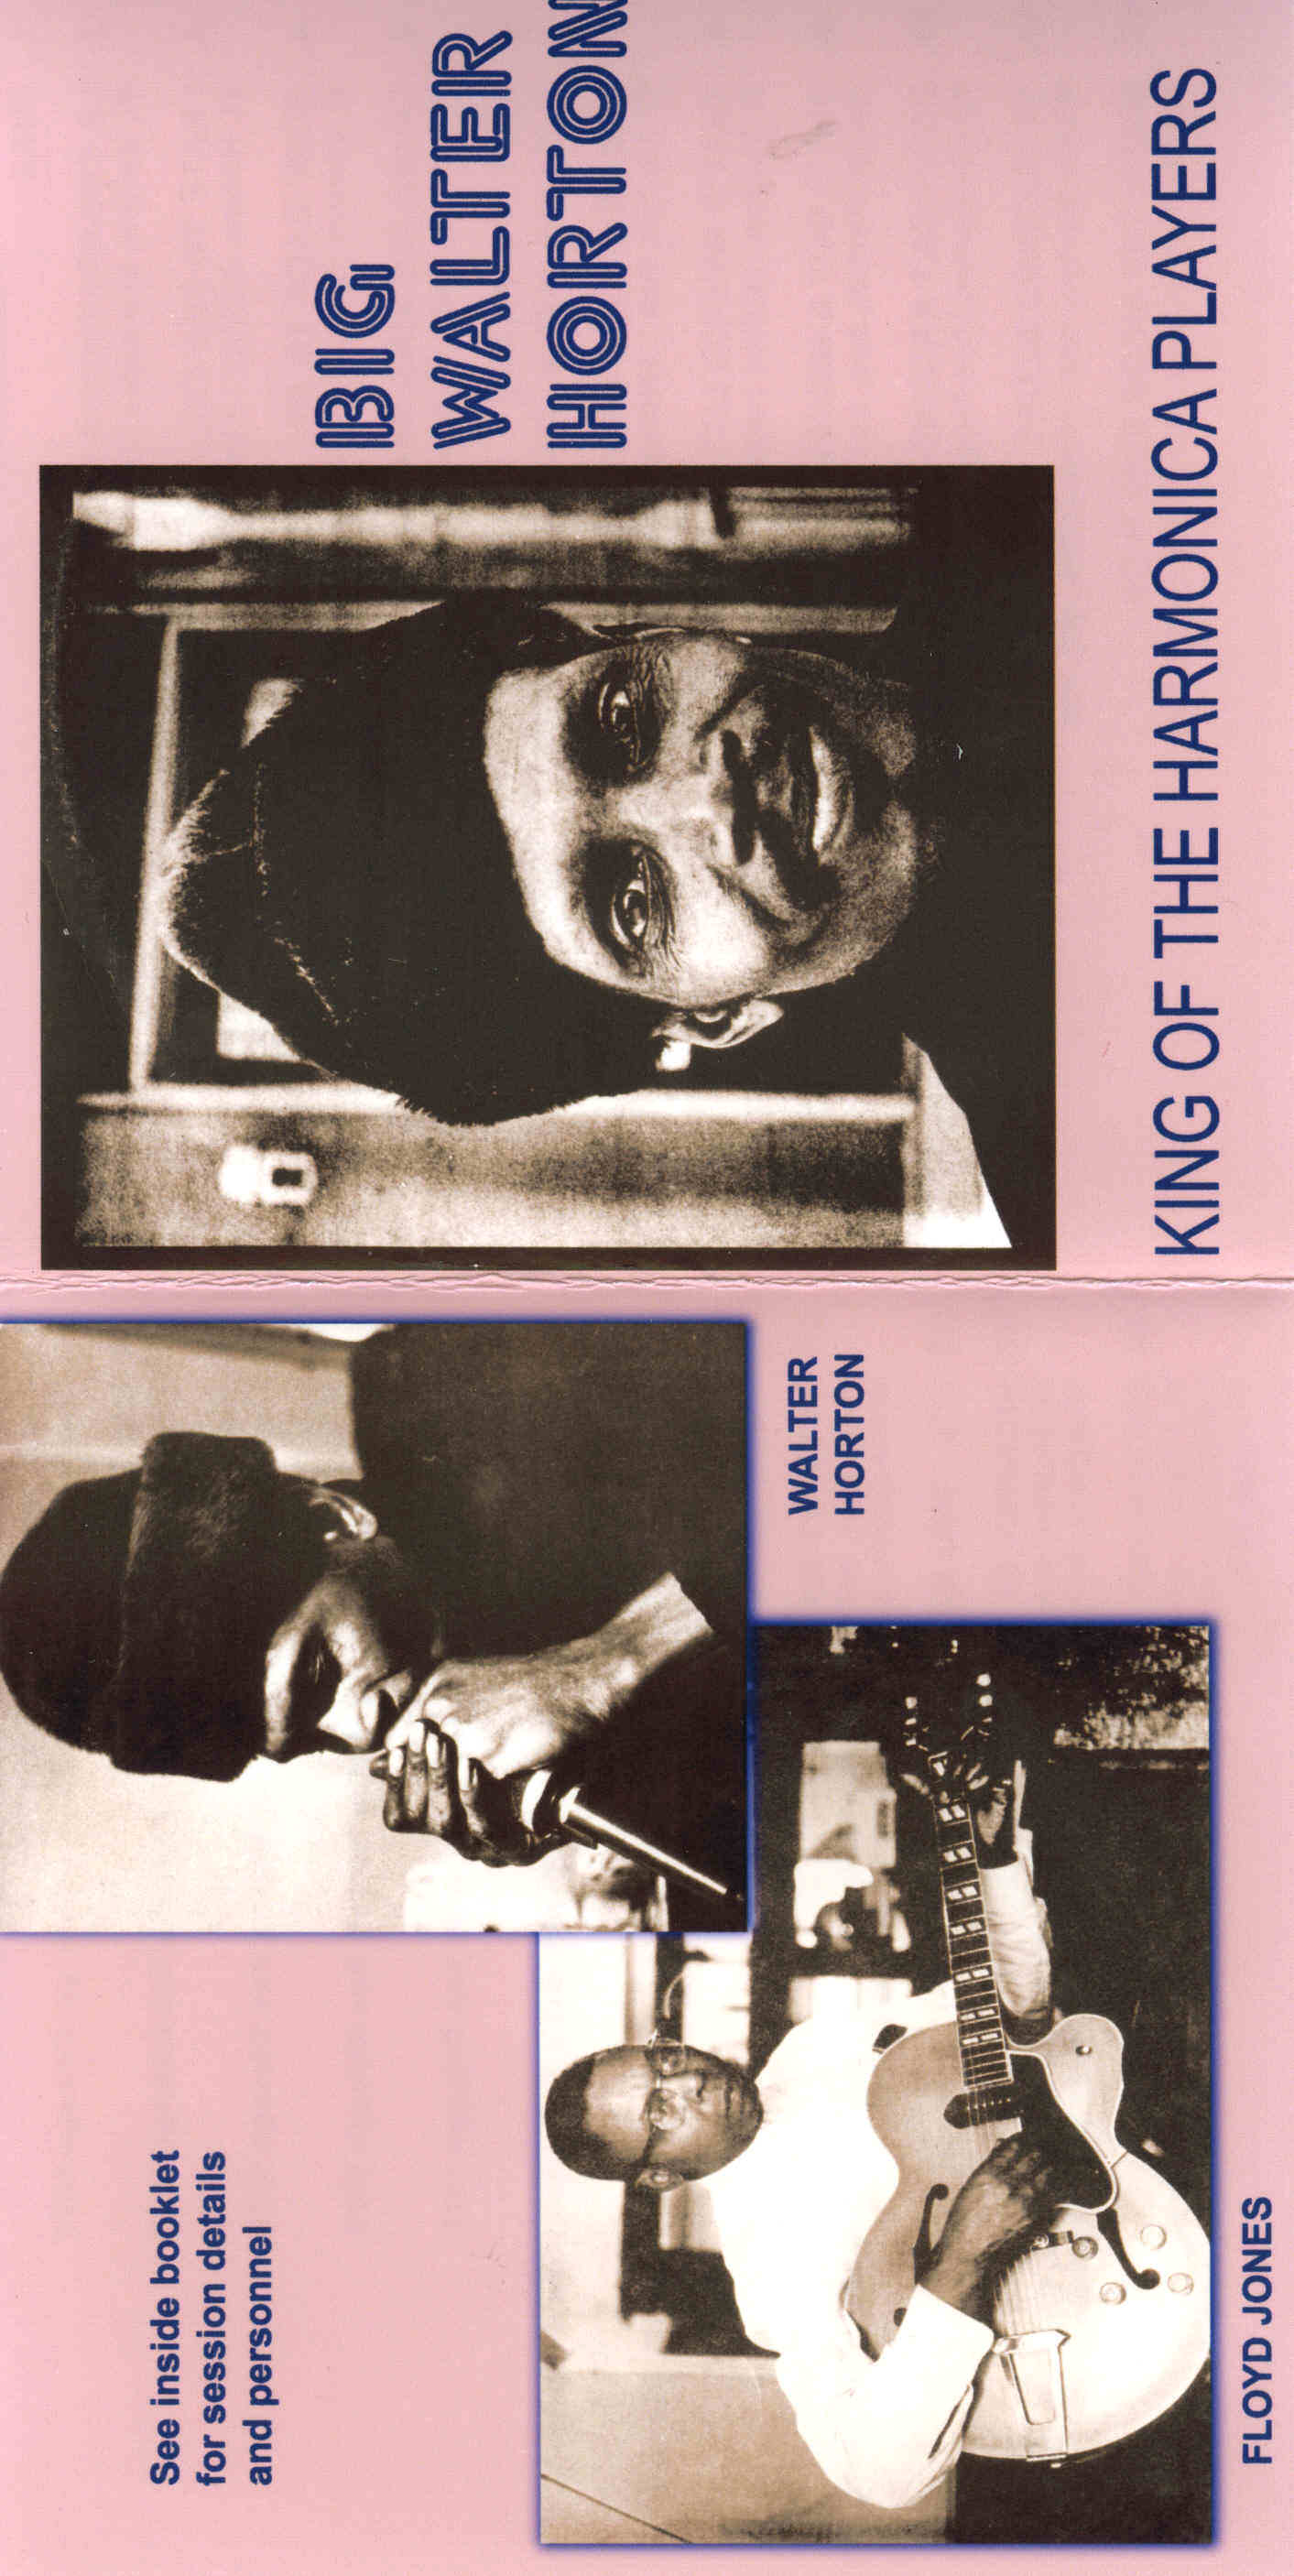 Big Walter Horton - King Of The Harmonica Players